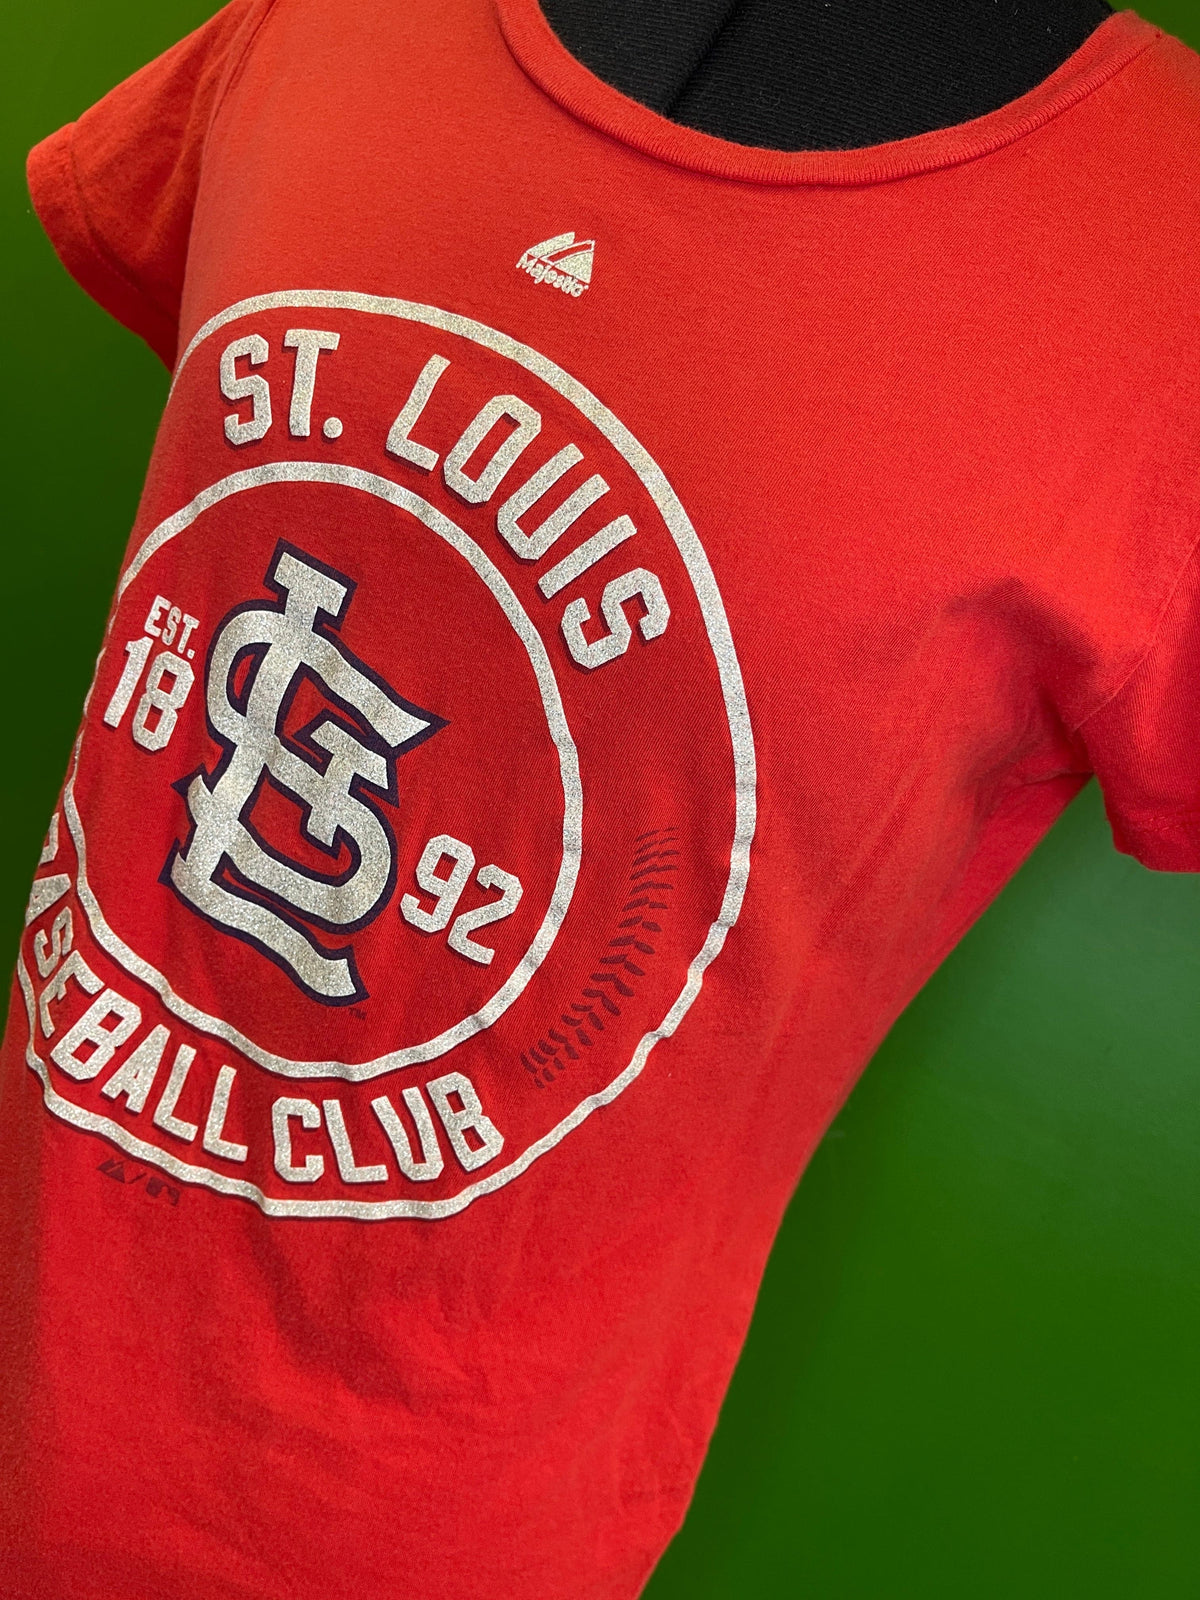 MLB St. Louis Cardinals Majestic Sparkly T-Shirt Women's Medium